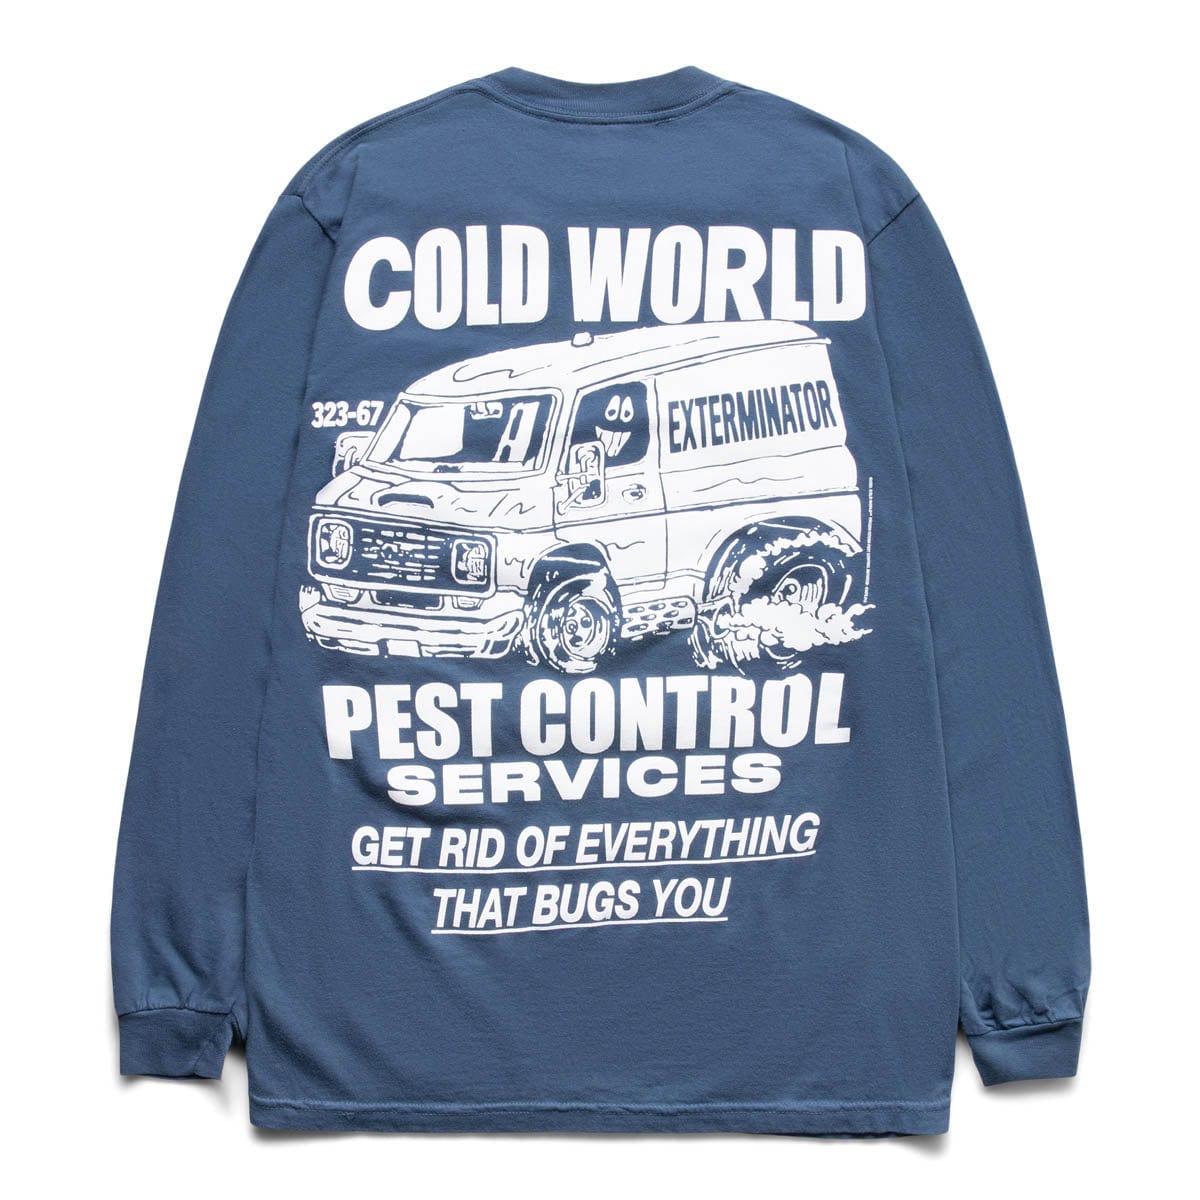 Cold World Frozen Goods T-Shirts PEST CONTROL LONG SLEEVE